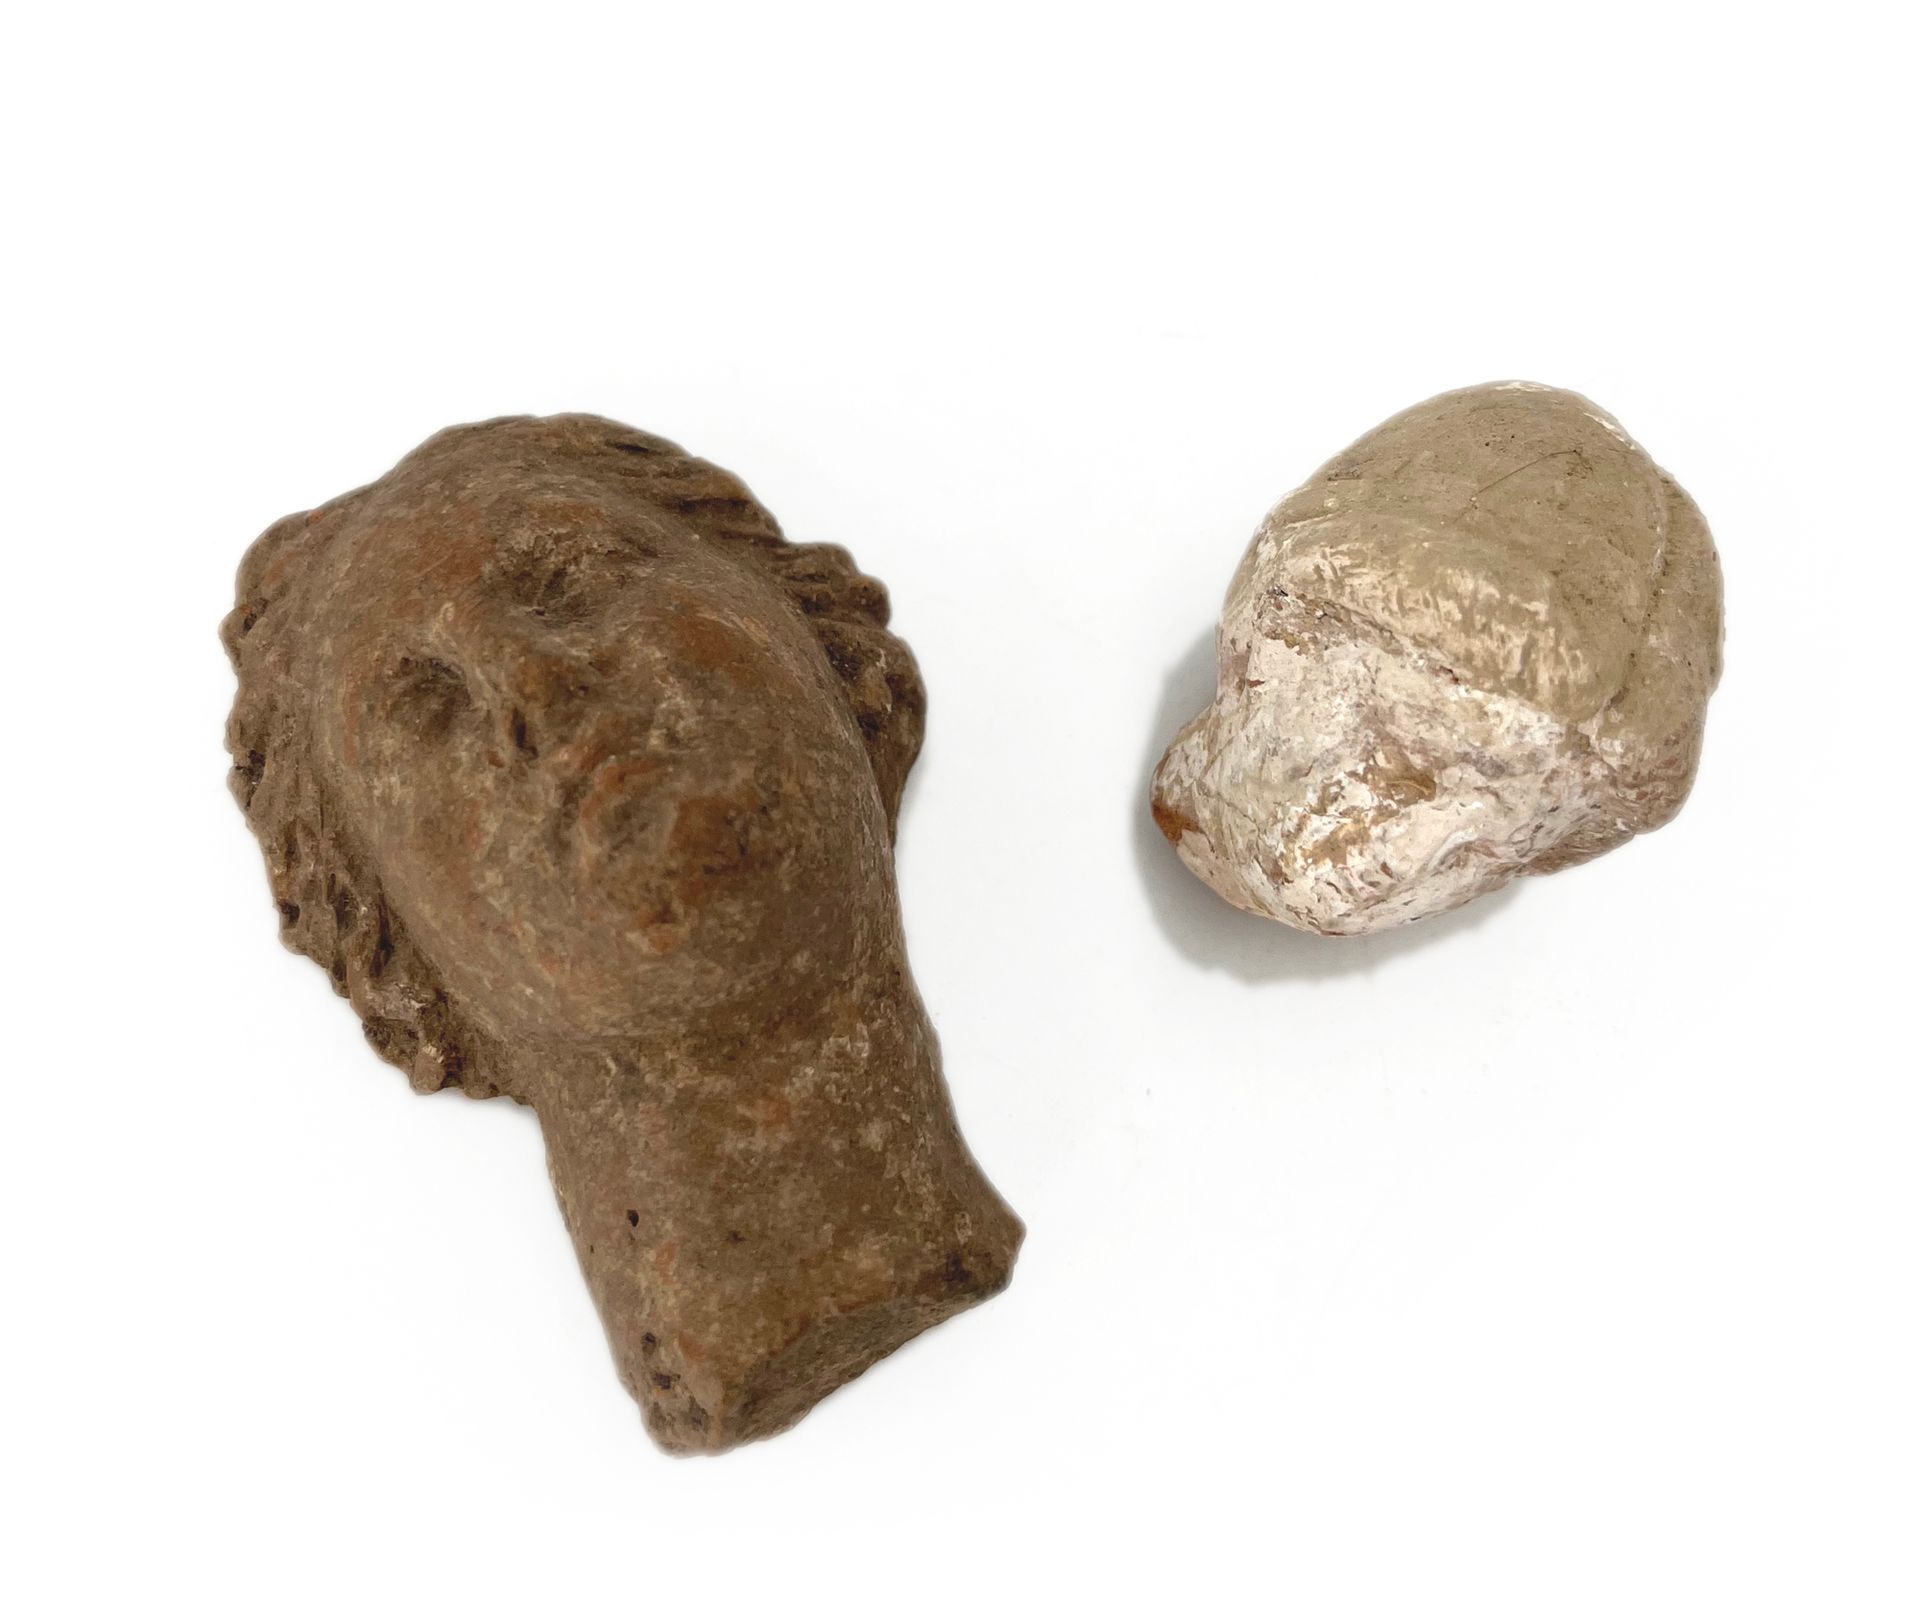 Null 由两个陶制女性头像组成的拍品
希腊化时期，公元前4-3世纪